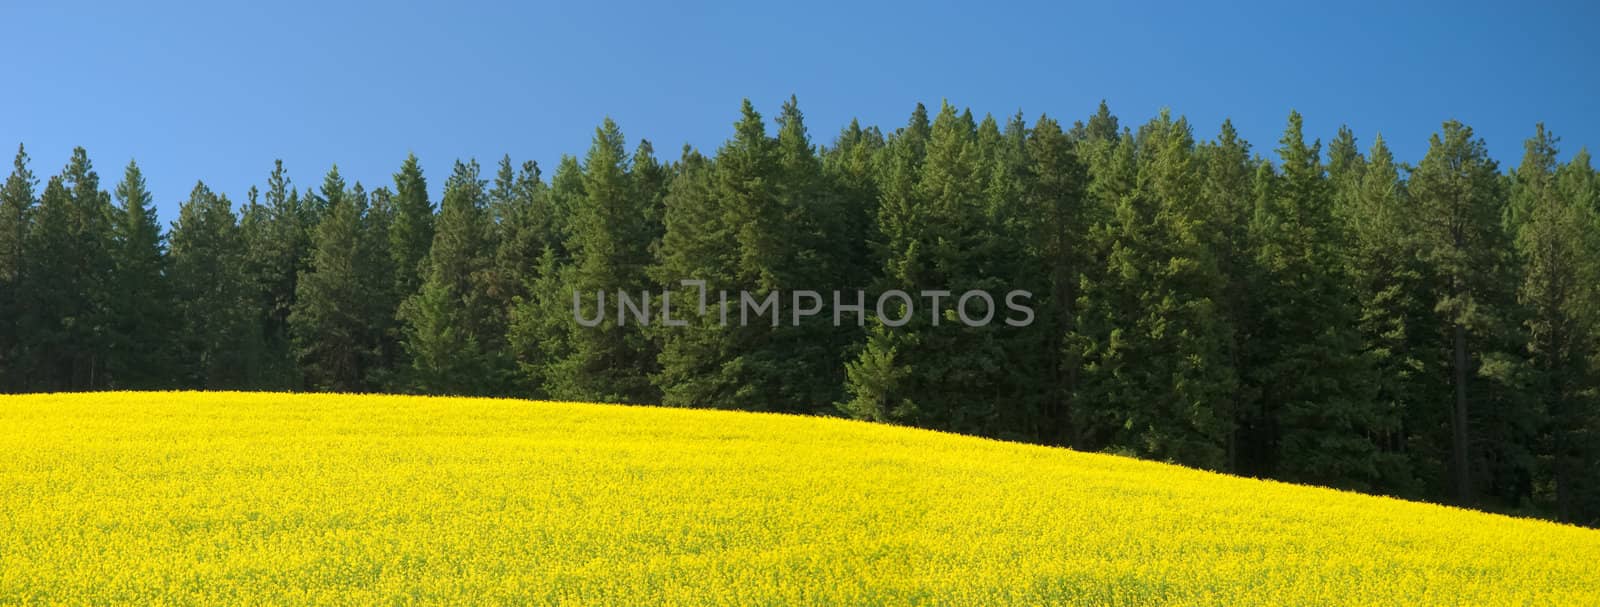 Canola field, spruce and pine trees, near Troy, Latah County, Idaho, USA